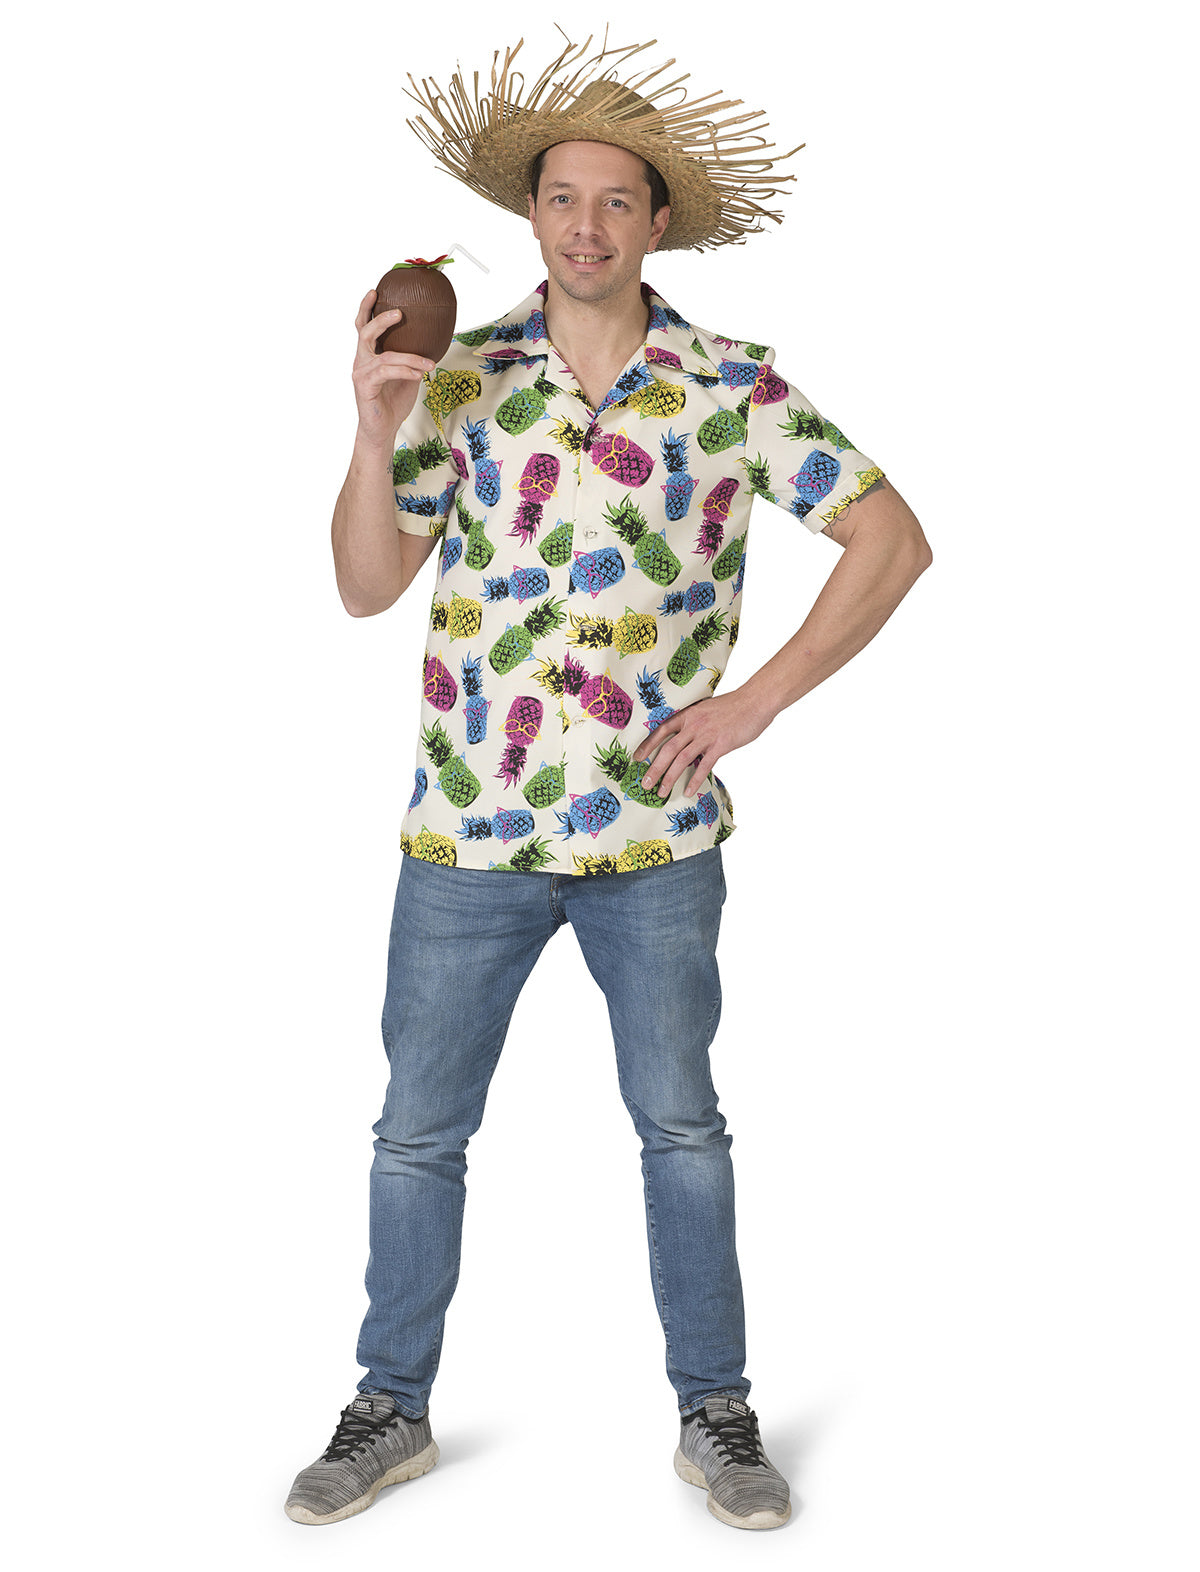 Funny Fashion - Natuur Groente & Fruit Kostuum - Tropisch Samba Costa Rica Ananas Shirt Man - wit / beige,multicolor - Maat 60-62 - Carnavalskleding - Verkleedkleding